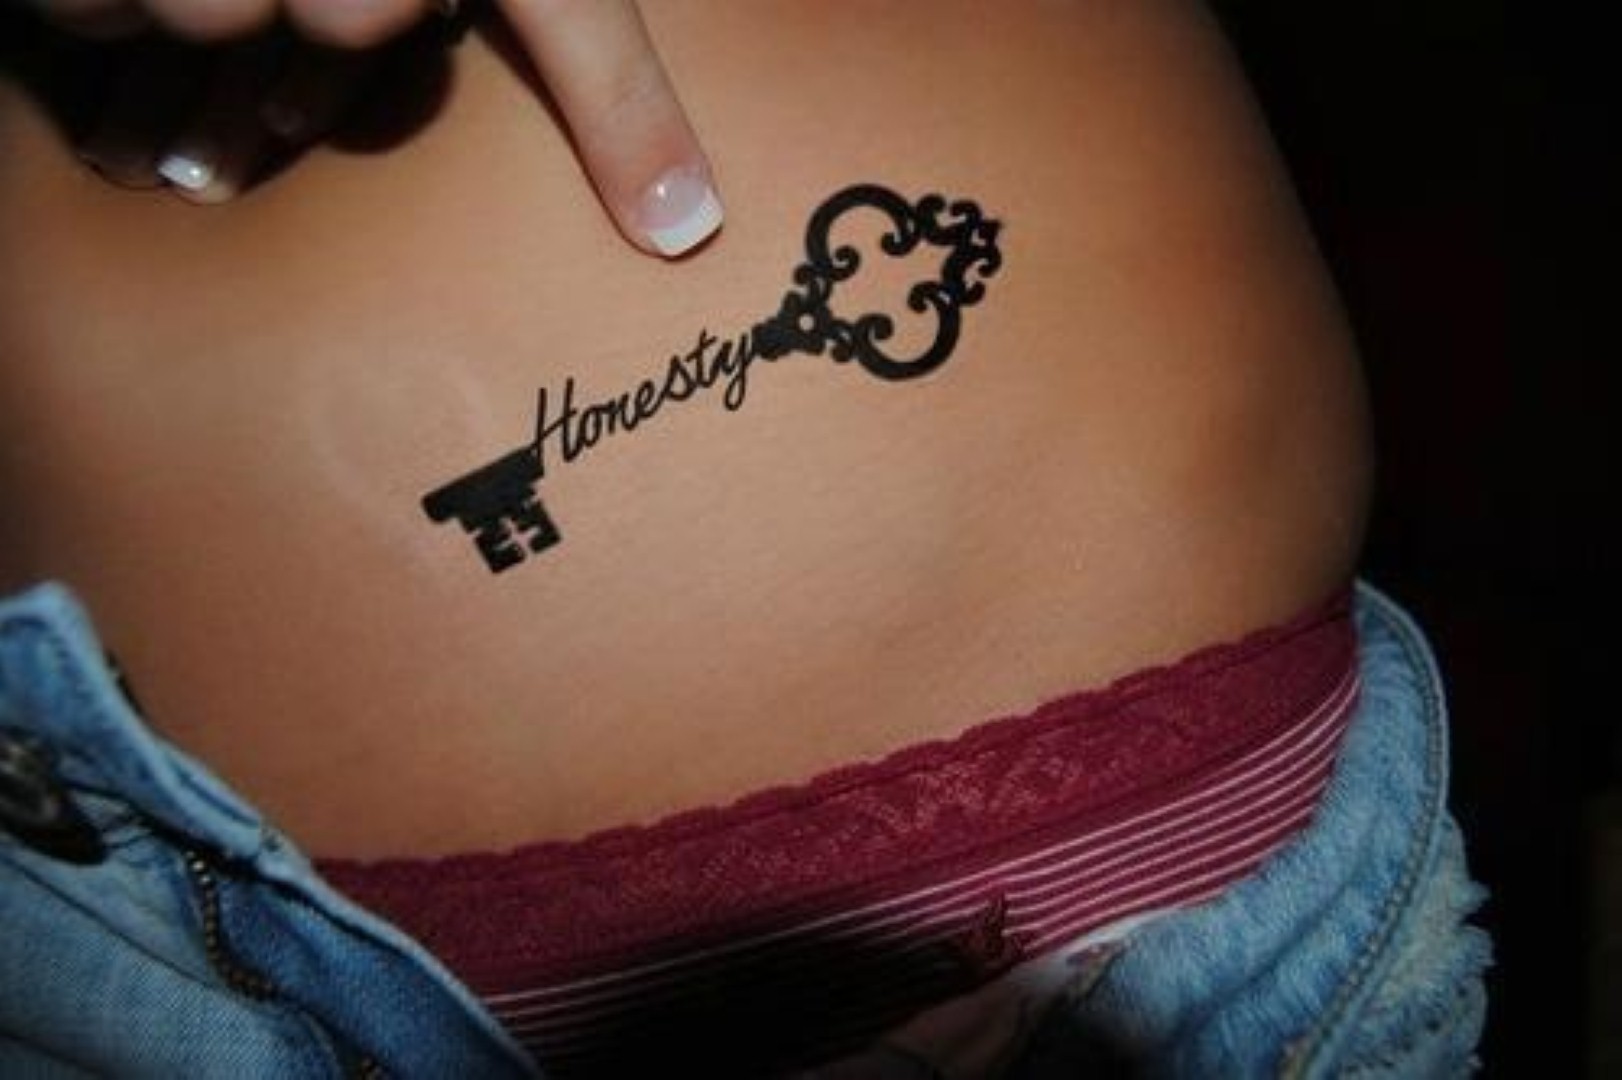 word tattoo design for girl's